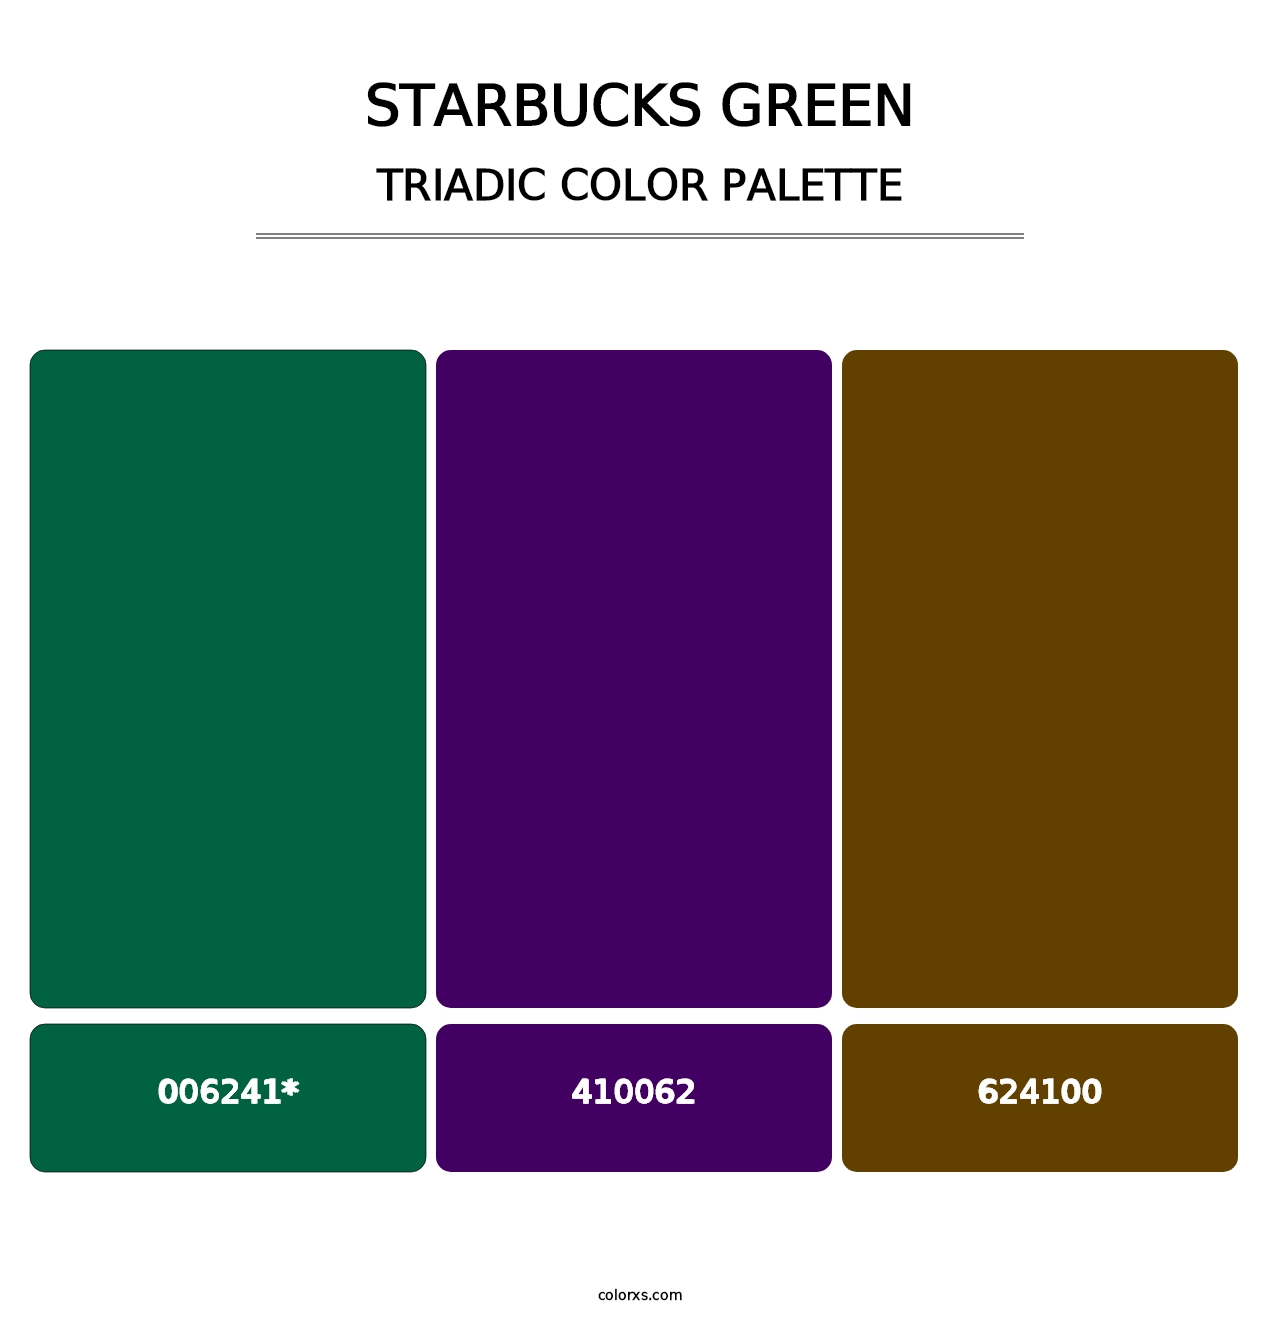 Starbucks Green - Triadic Color Palette